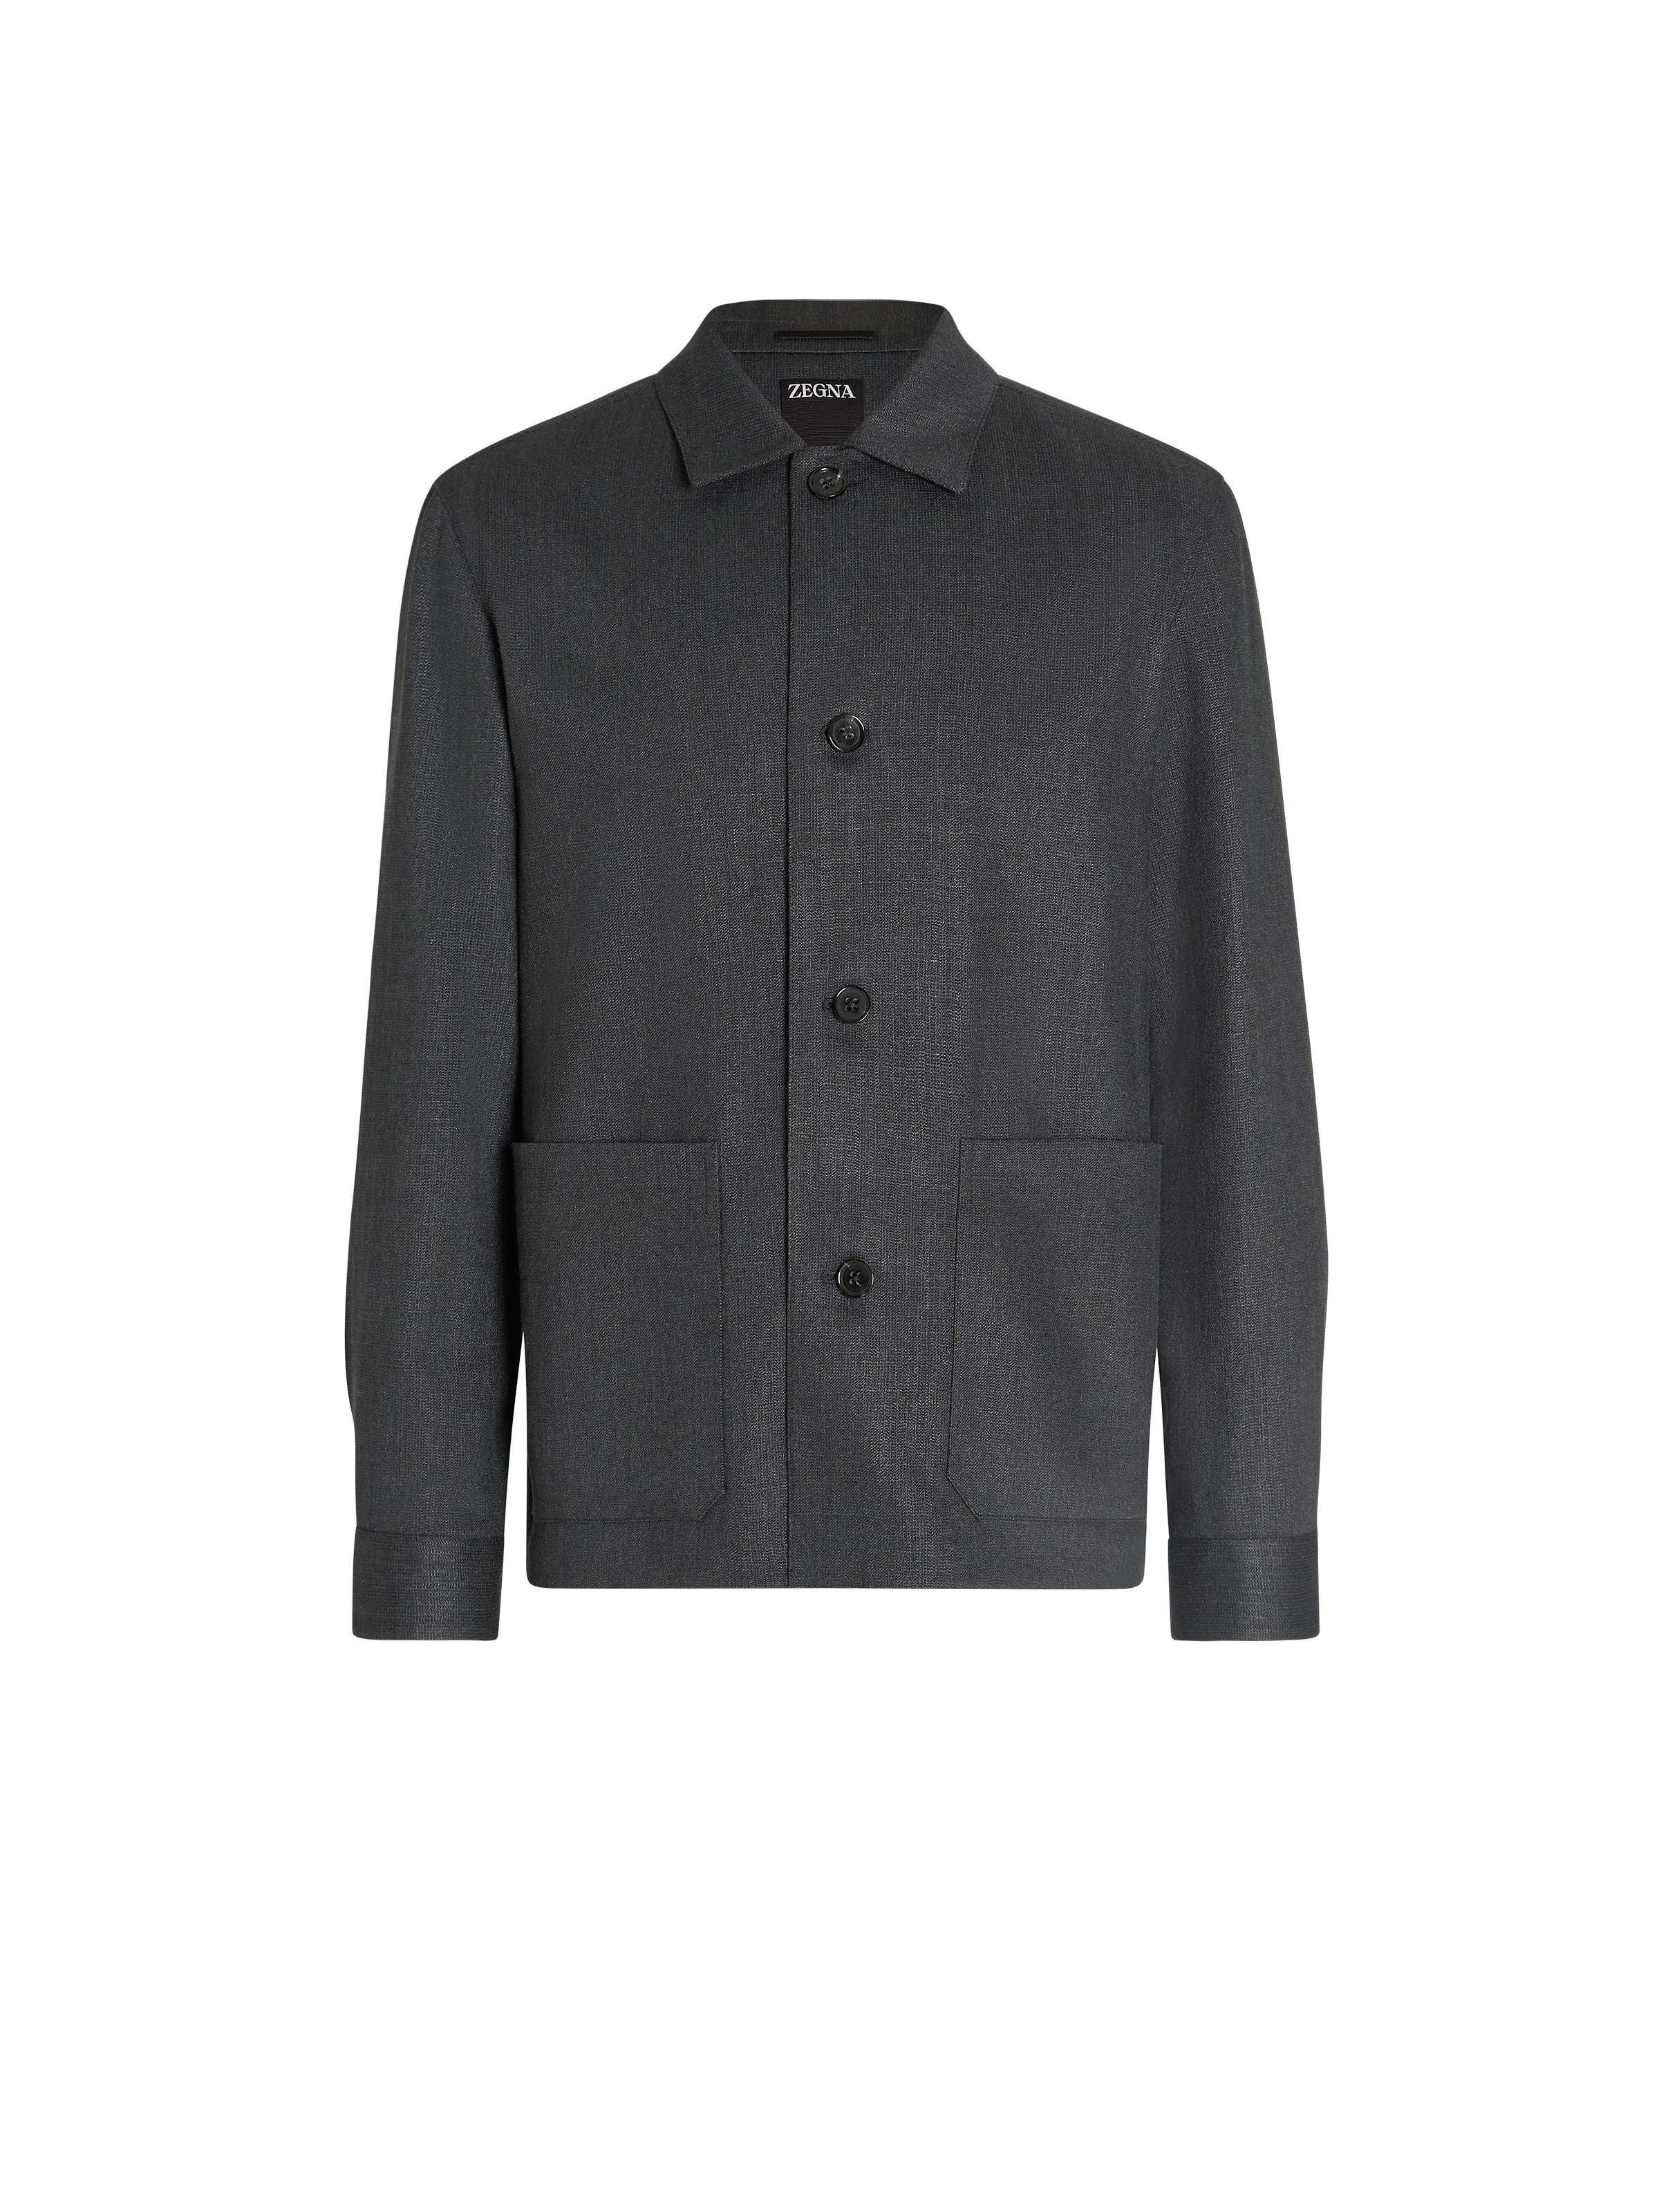 Zegna Black Silk And Linen Blend Chore Jacket